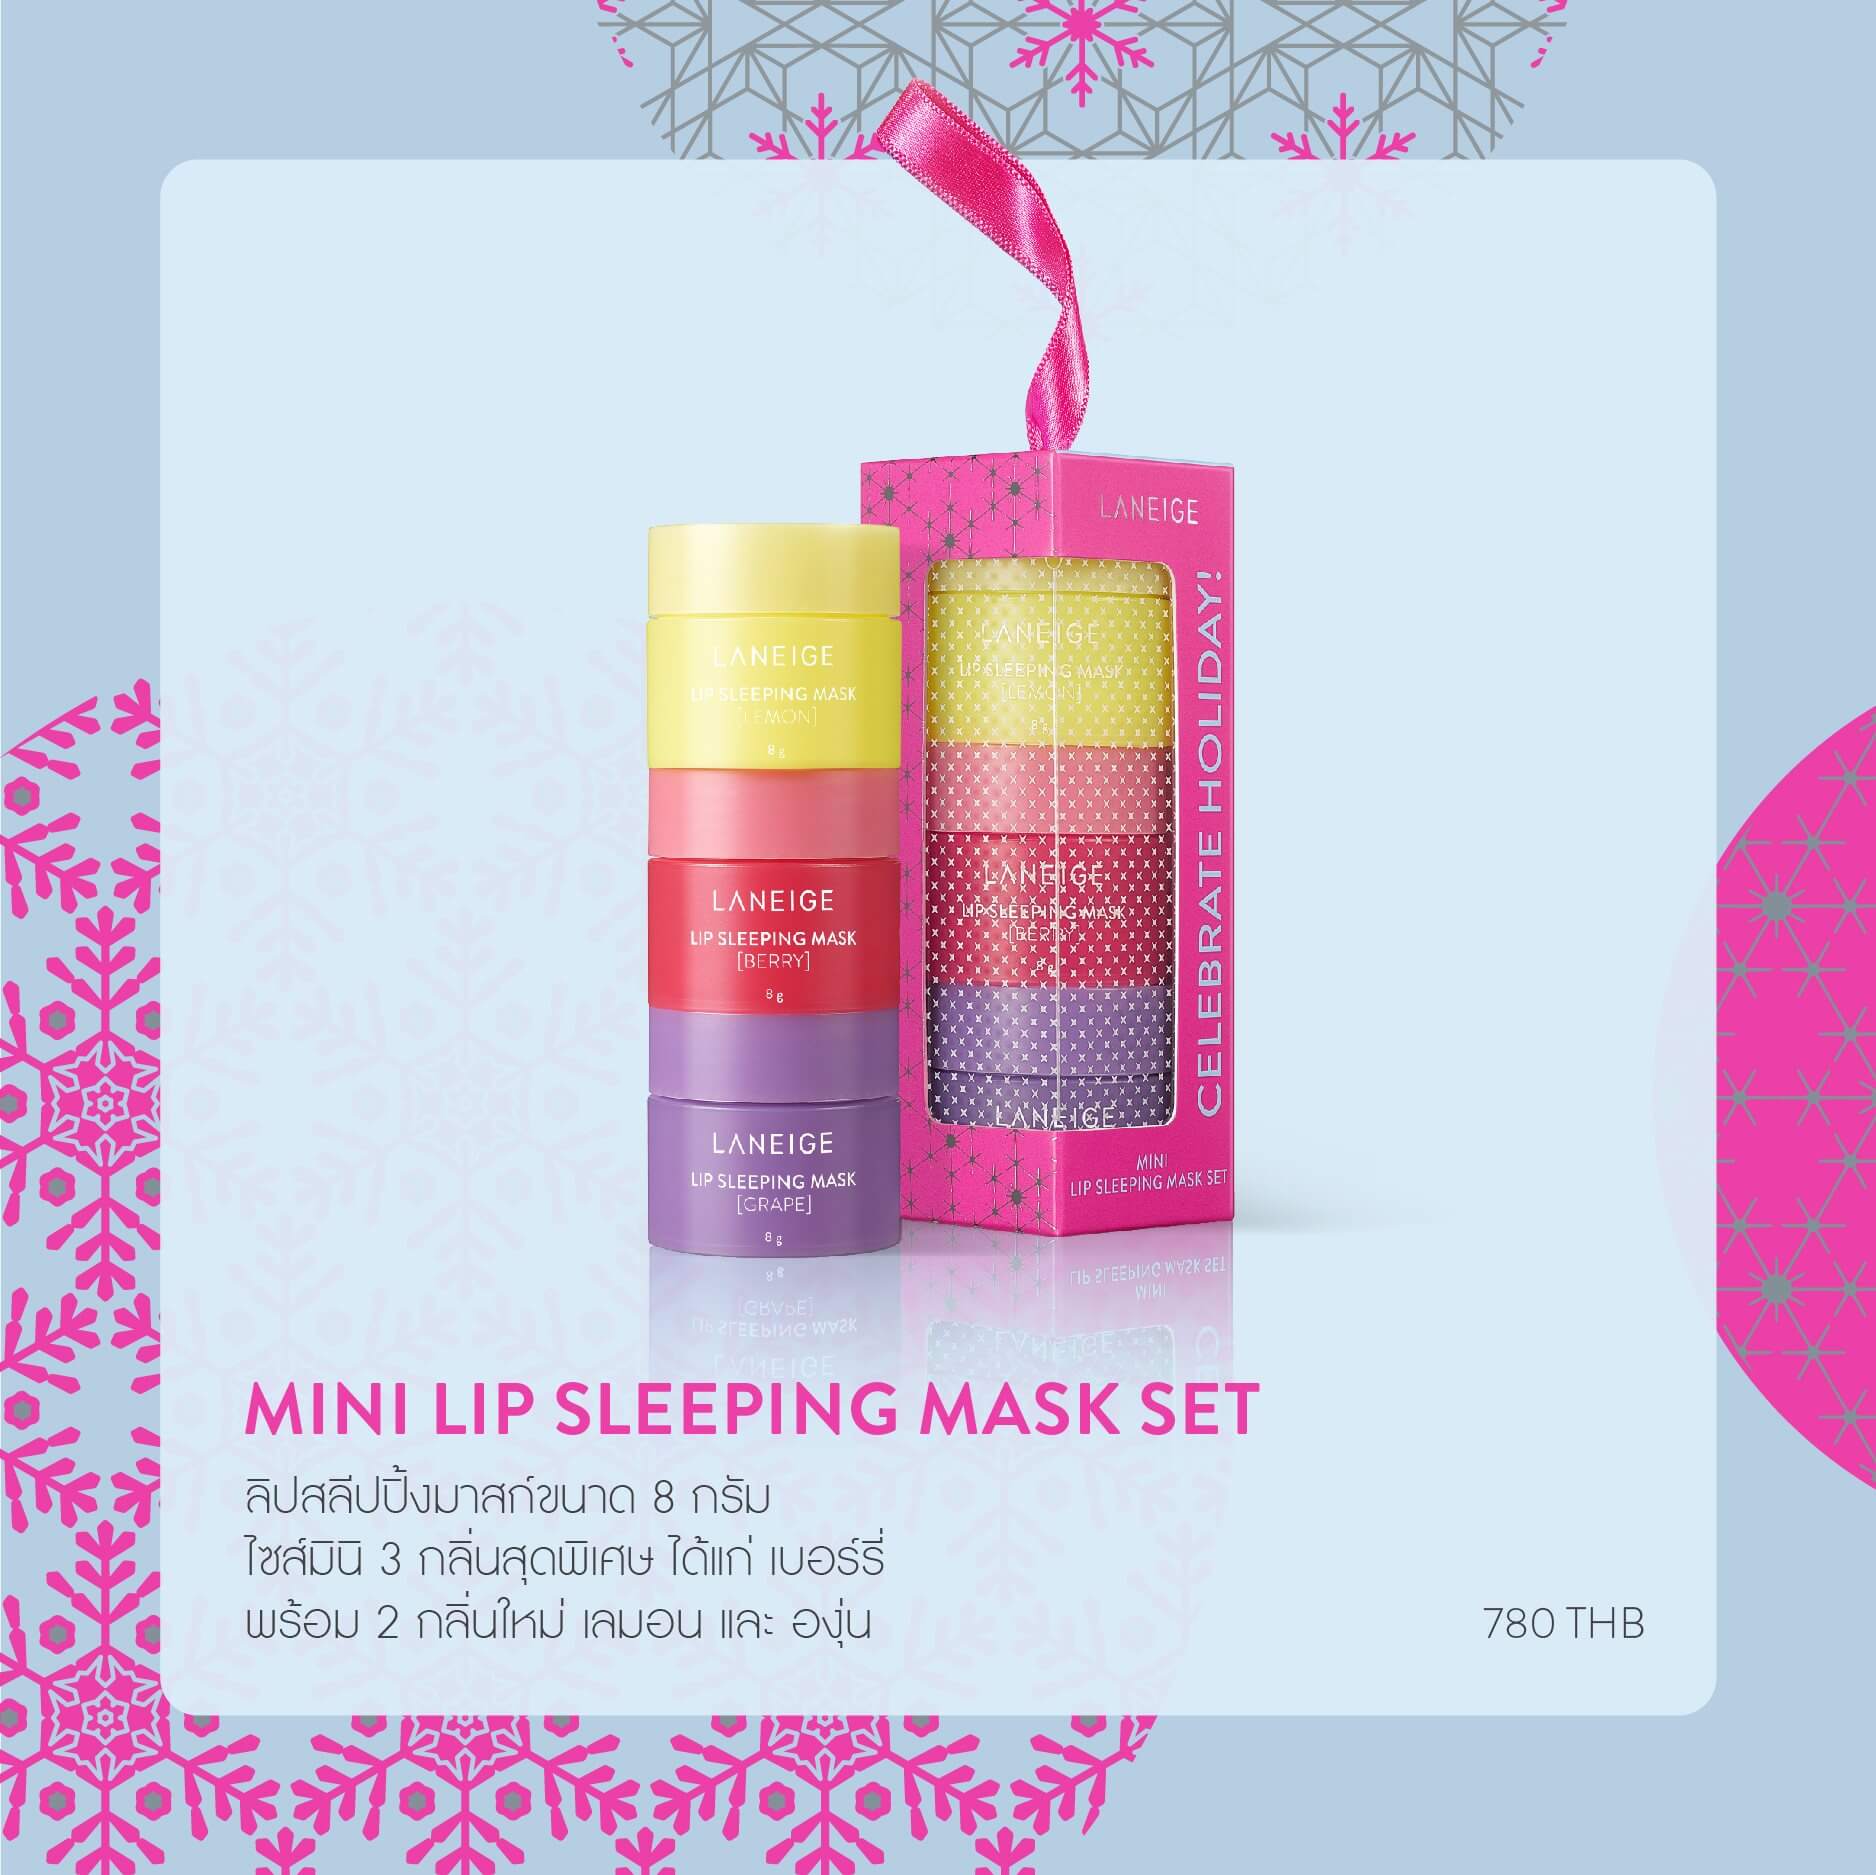 Laneige Mini Lip Sleeping Mask Set (Limited Edition Holiday 2020)  ลิปสลีปปิ้งมาสก์ไซส์มินิ บำรุงริมฝีปากแบบข้ามคืน ริมฝีปากเด้งดึ๋งเหมือนเยลลี่ พร้อมนุ่มชุ่มชื้น  ภายในเซตประกอบด้วย  Laneige Lip Sleeping Mask Berry 8g  Laneige Lip Sleeping Mask Lemon 8g  Laneige Lip Sleeping Mask Grape 8g